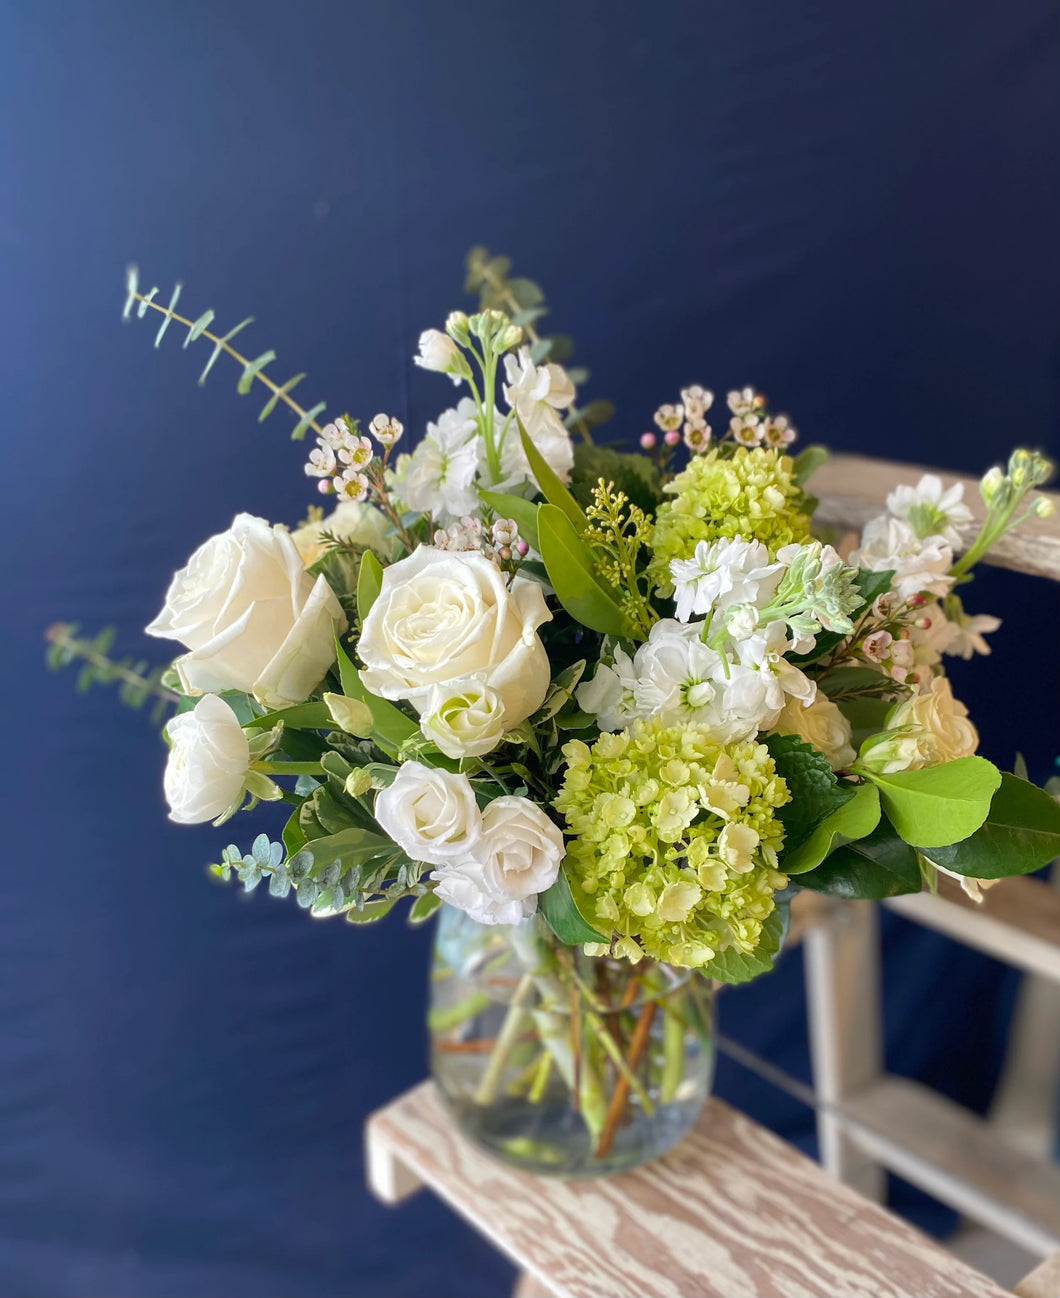 Fleurish White and Green Flower Arrangement - Large